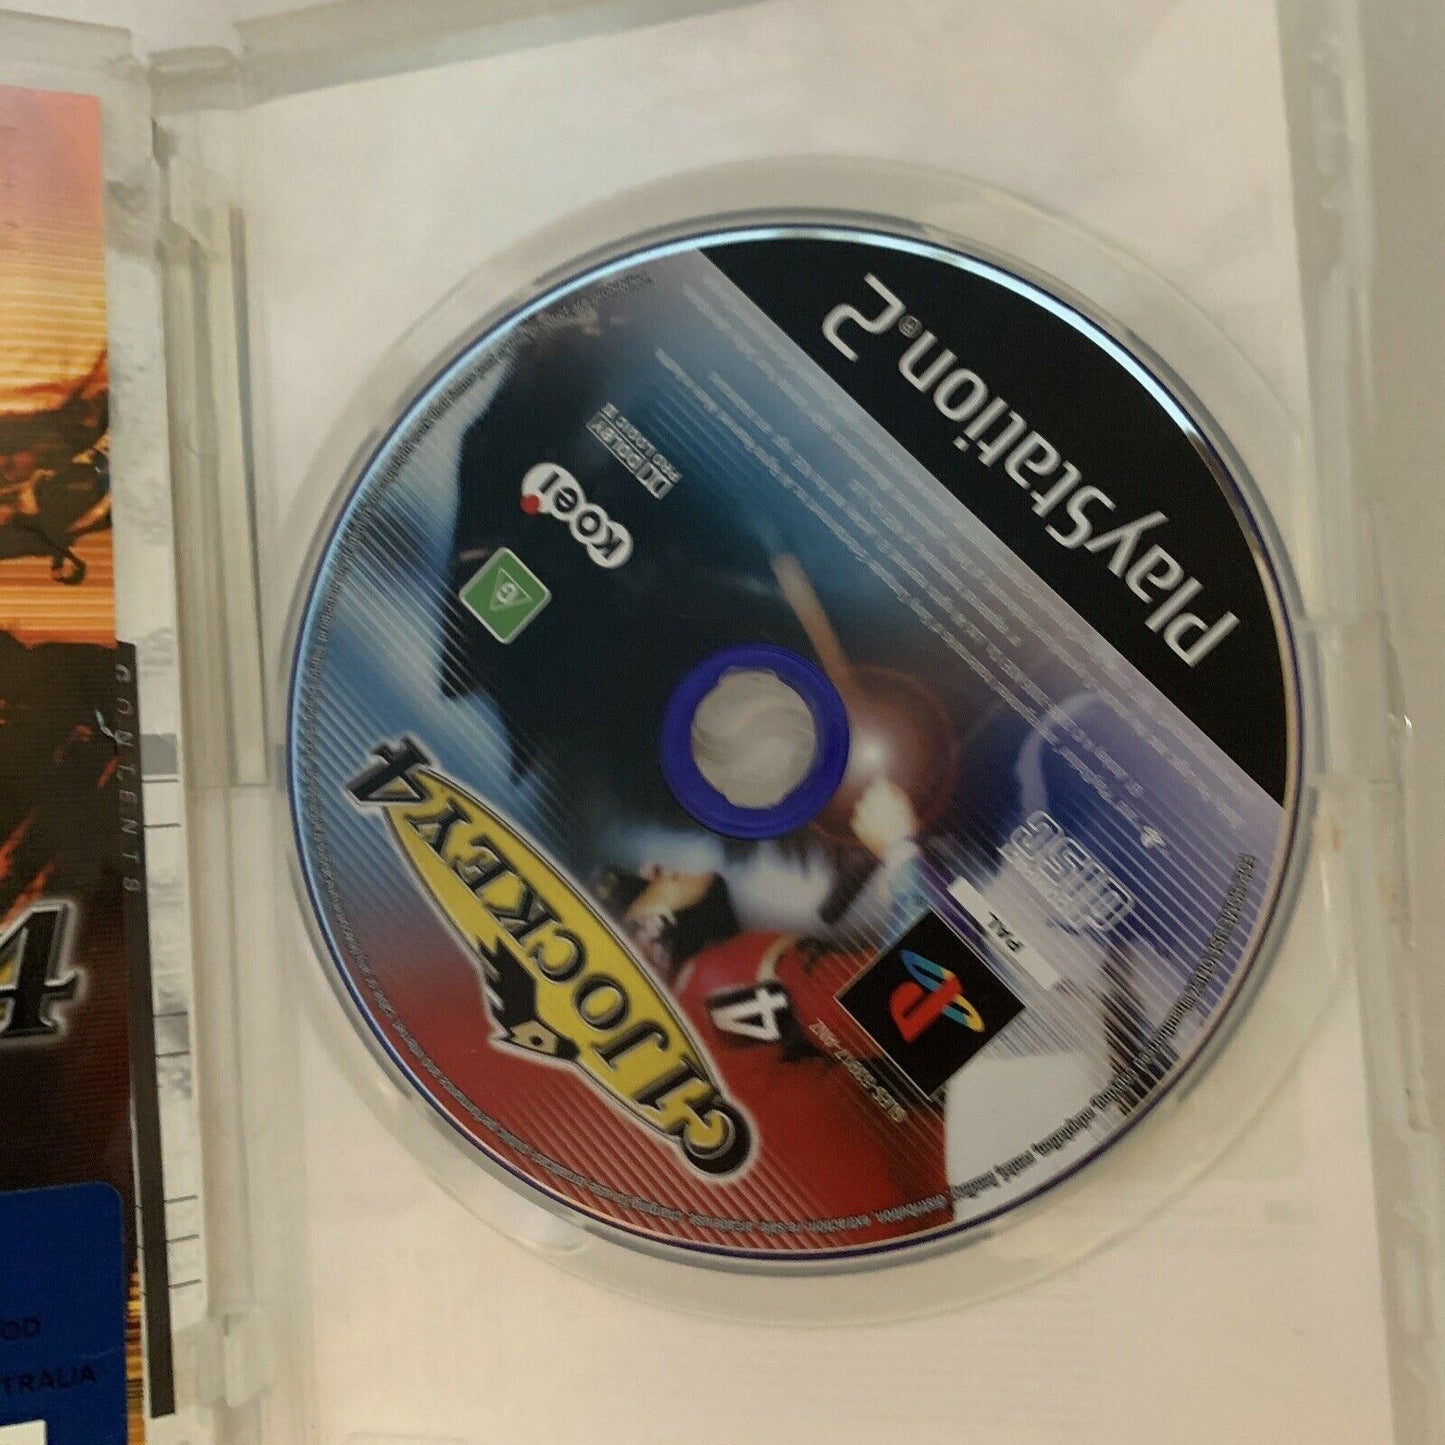 G1 Jockey 4 - Sony PS2 PlayStation 2 Game PAL